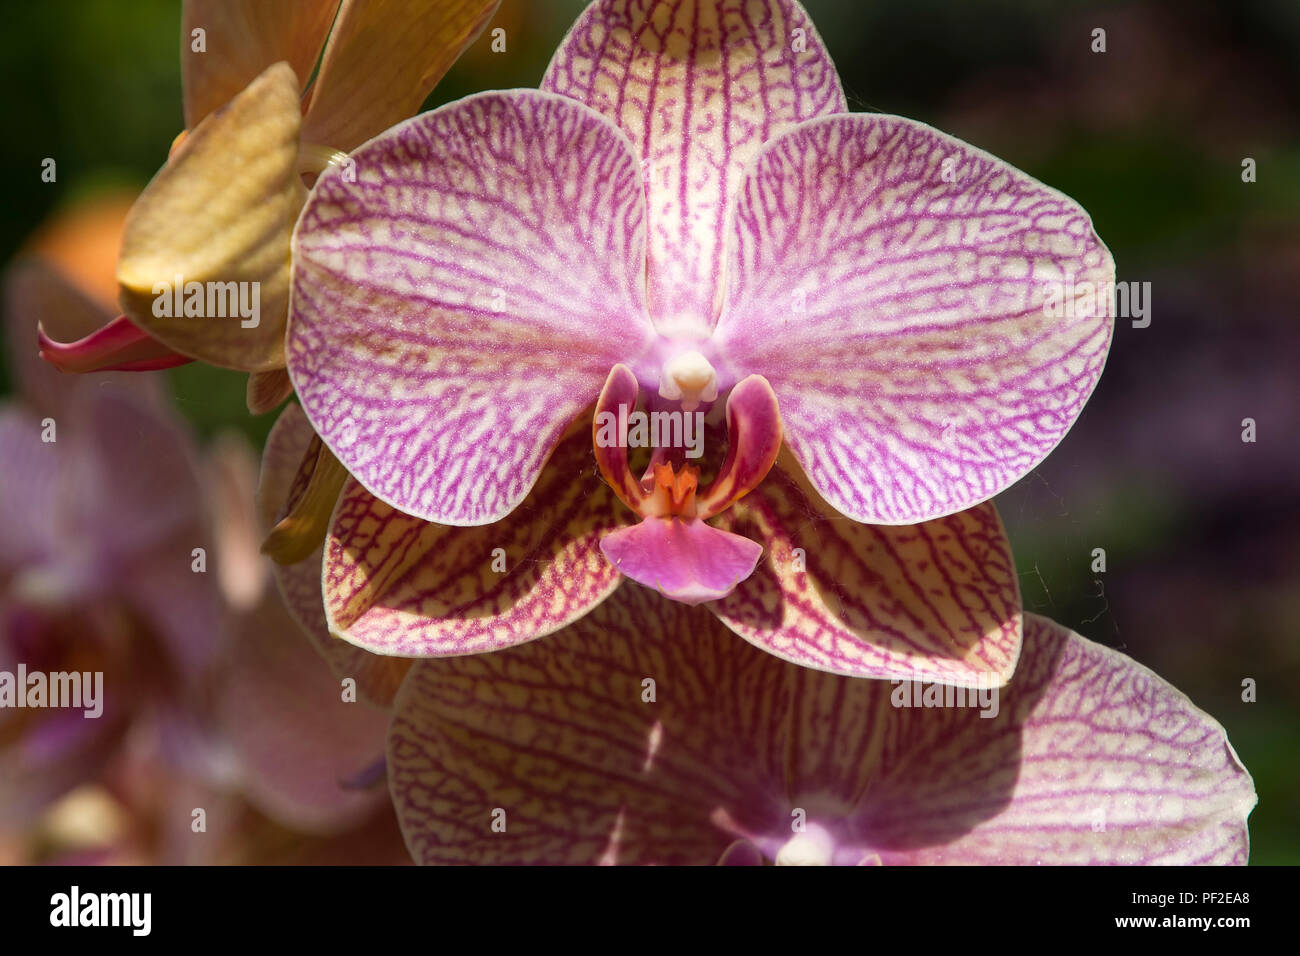 Sydney Australia, orange and purple moth orchid flowers close-up Stock Photo